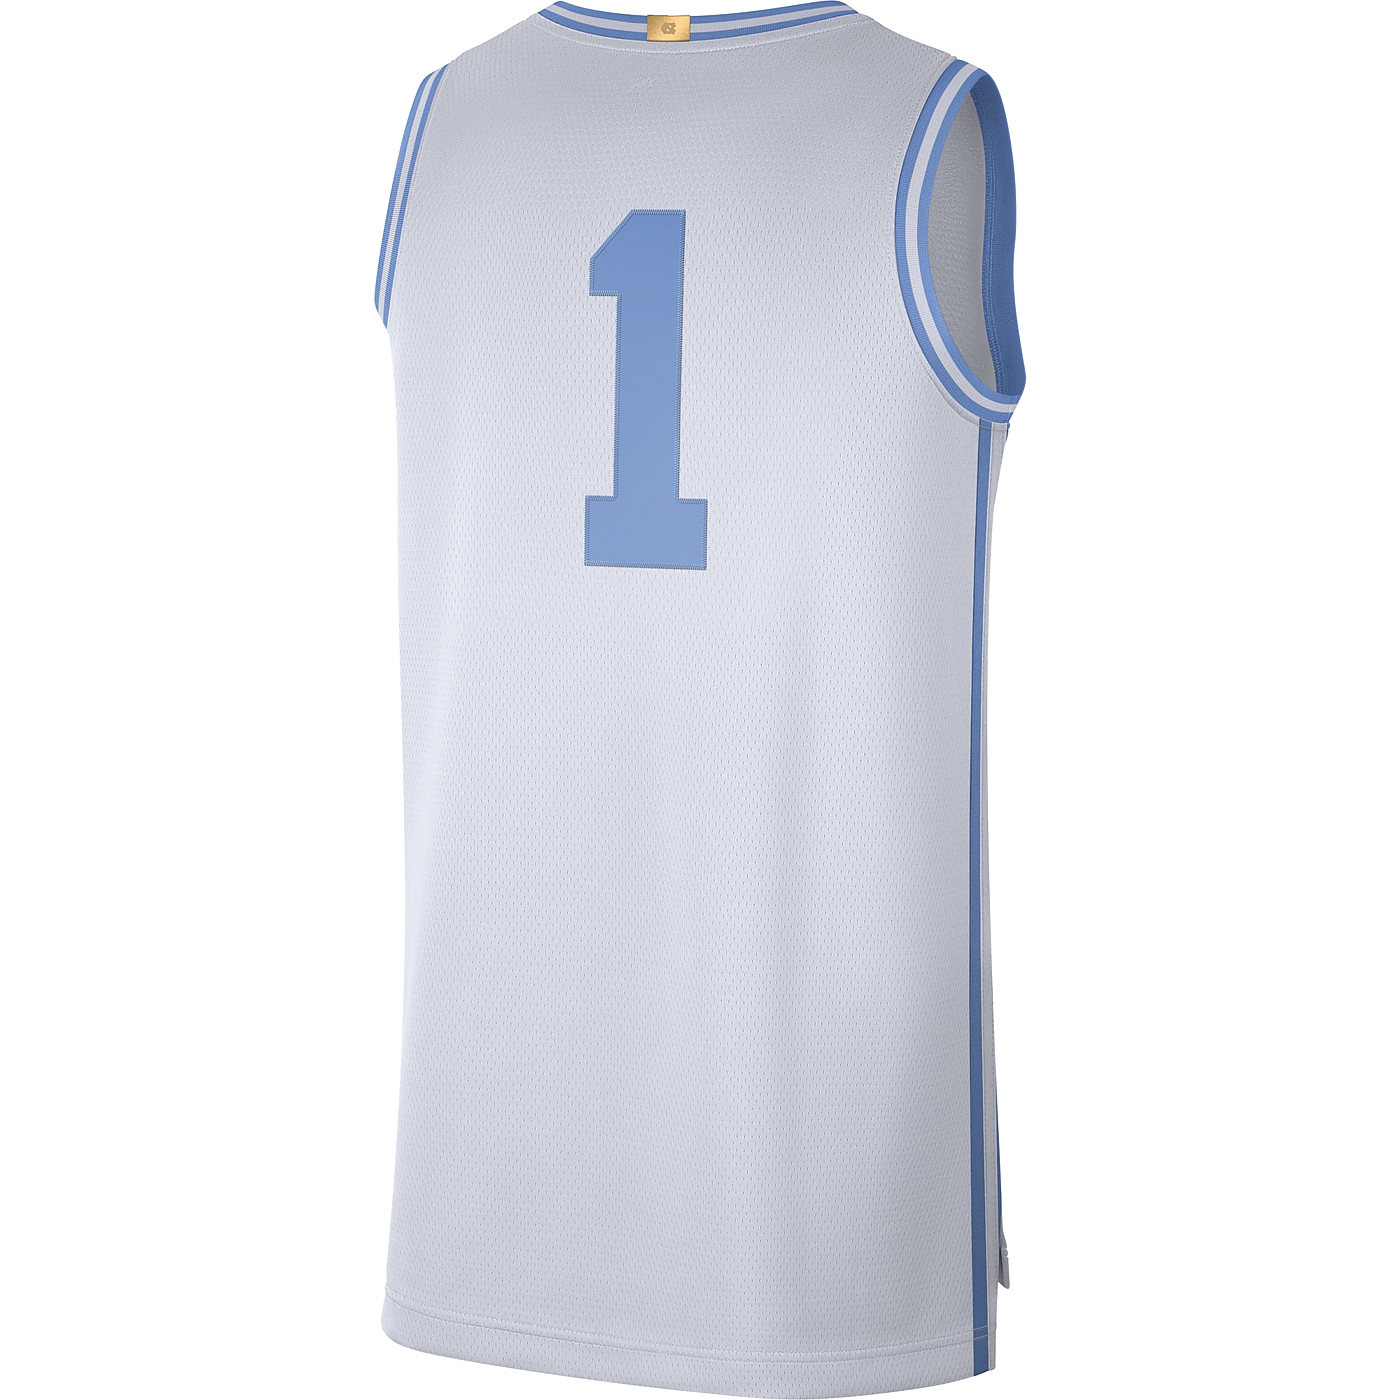 Johnny T-shirt - North Carolina Tar Heels - Nike Limited #15 Vince Carter  Basketball Jersey (CB) by Nike